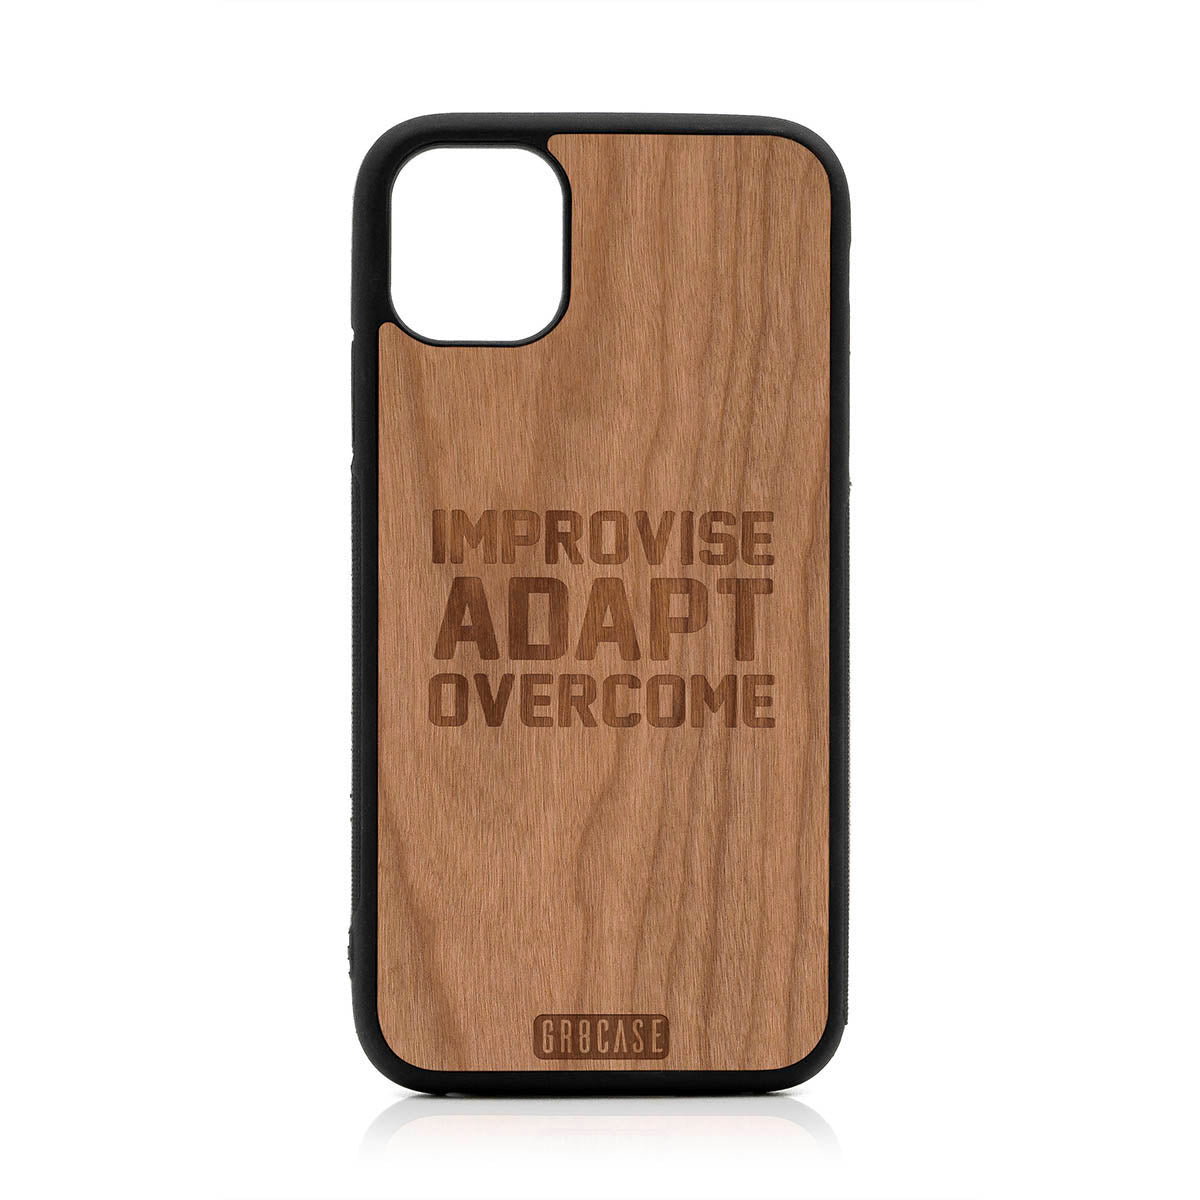 Improvise Adapt Overcome Design Wood Case For iPhone 11